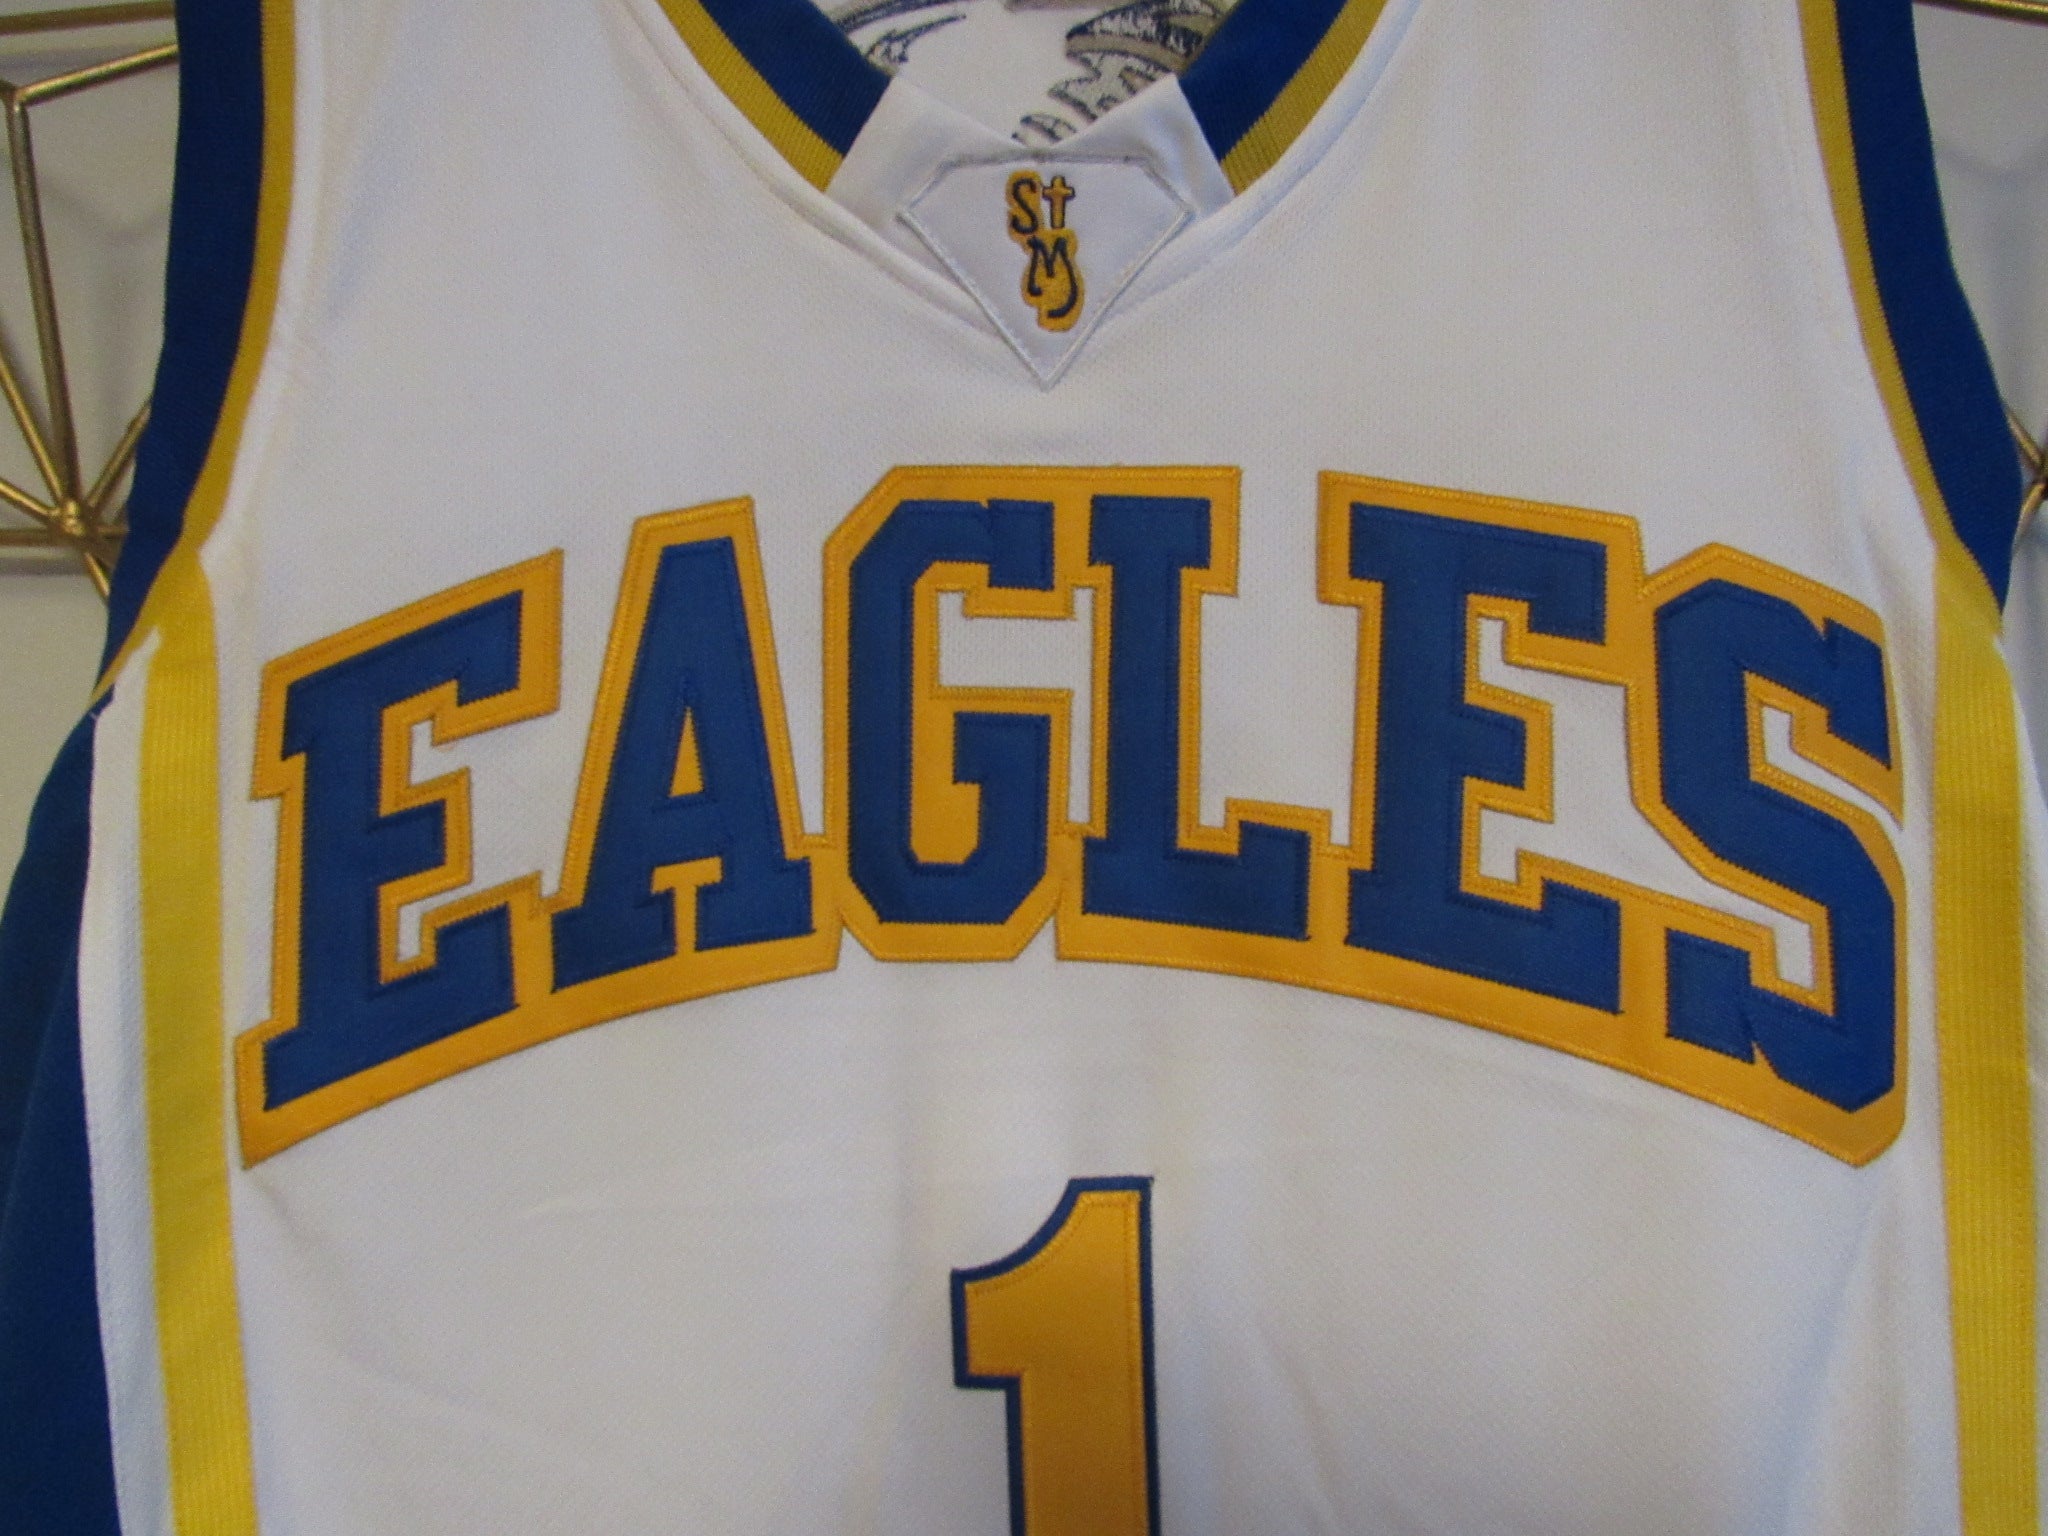 JordansSecretStuff Klay Thompson Eagles High School Basketball Jersey (Away) Custom Throwback Retro Jersey XL